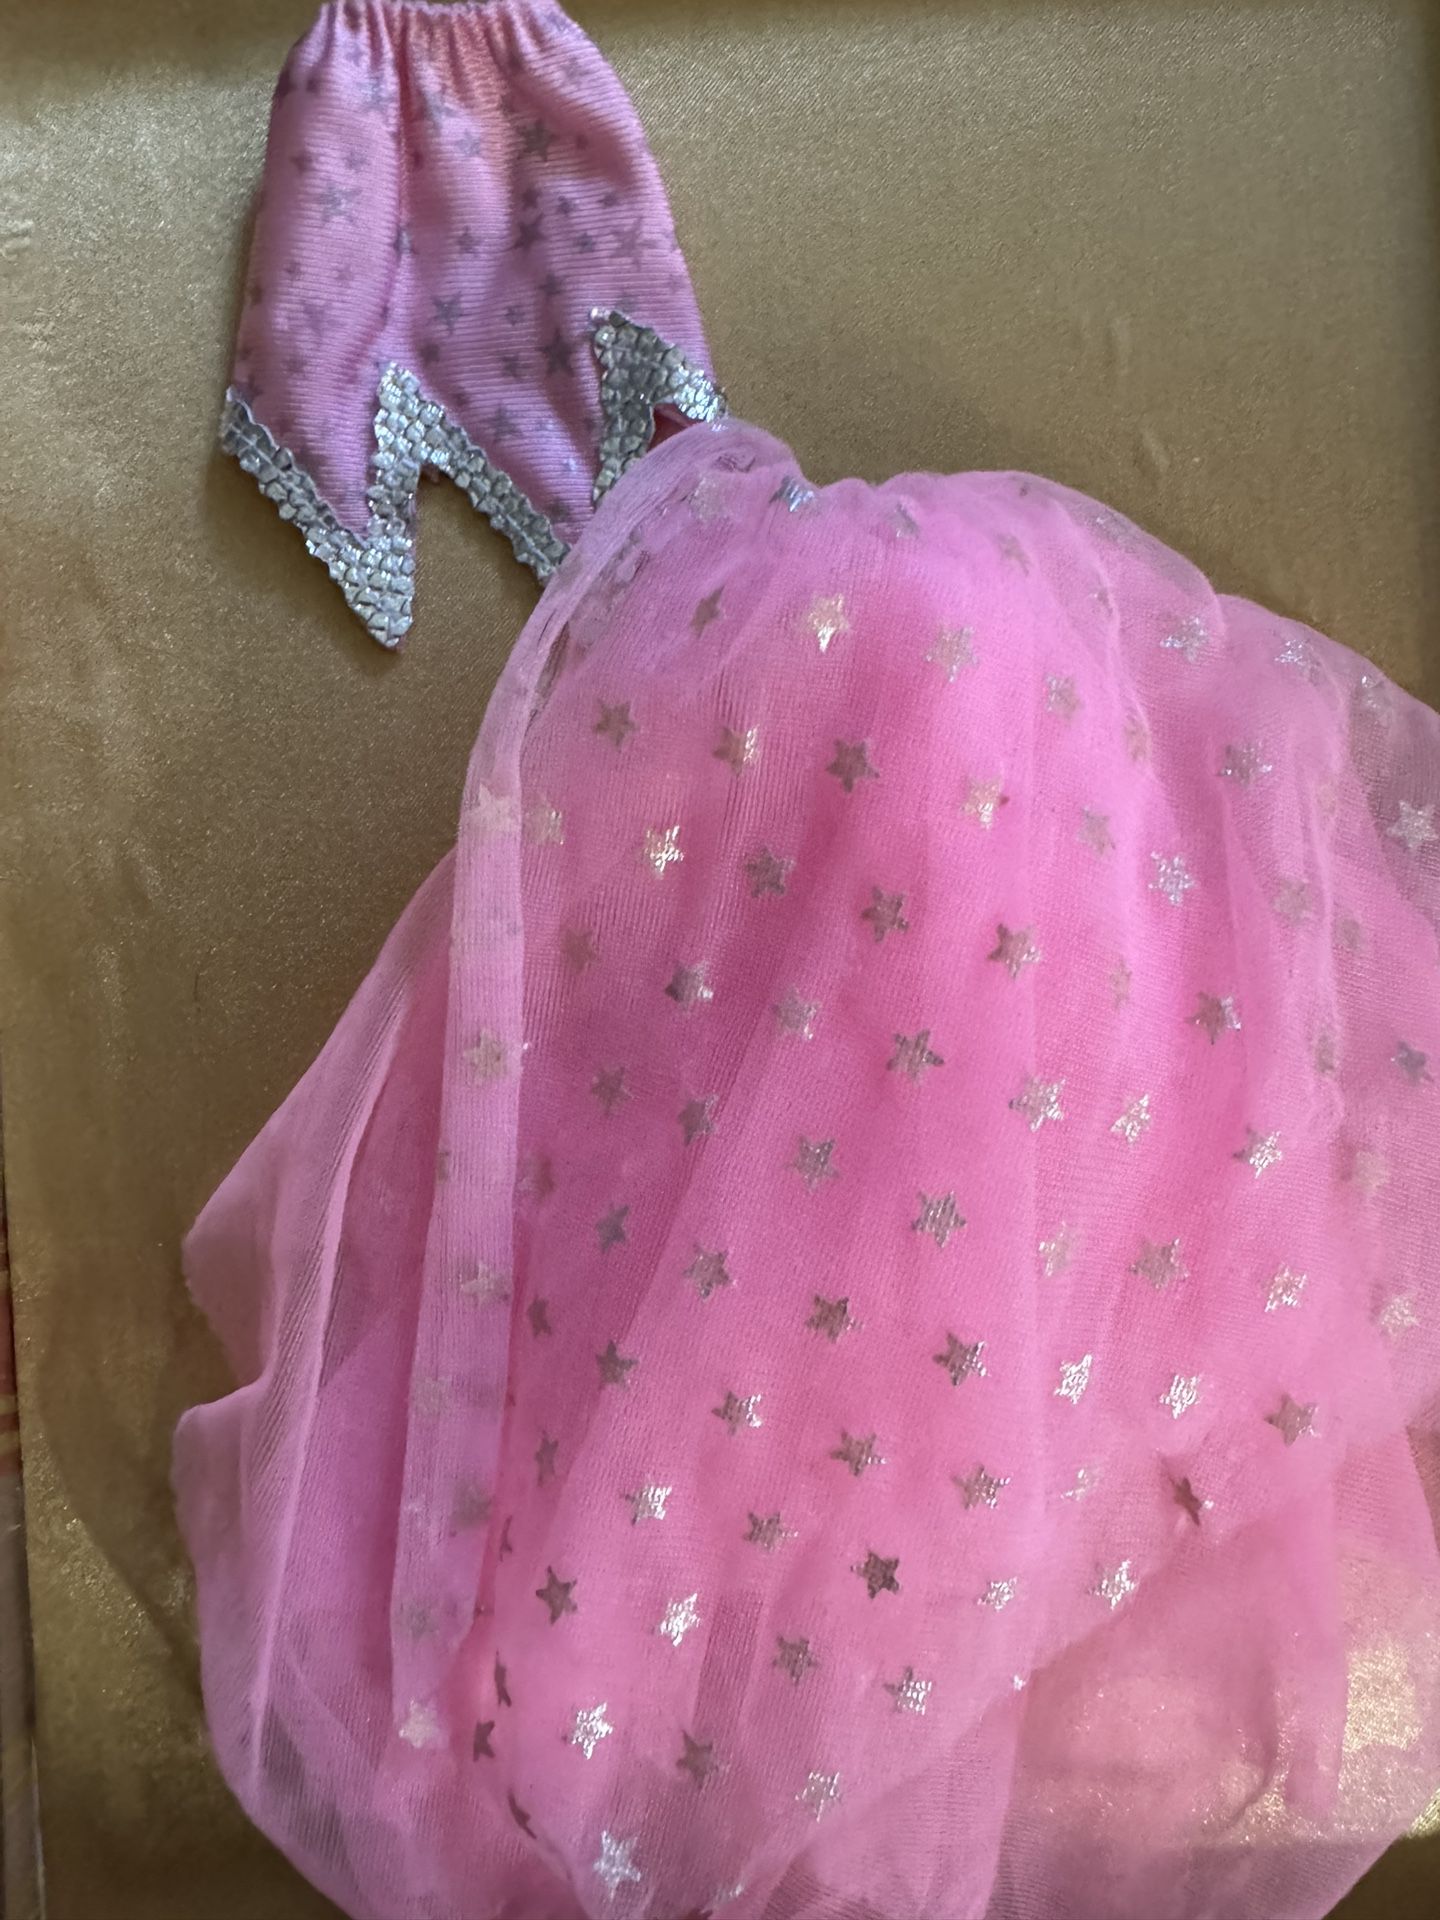 2 Pc Hard to Find Vintage Mattel 1988 Superstar Barbie Skirts #1604 Award Winning Replacements 